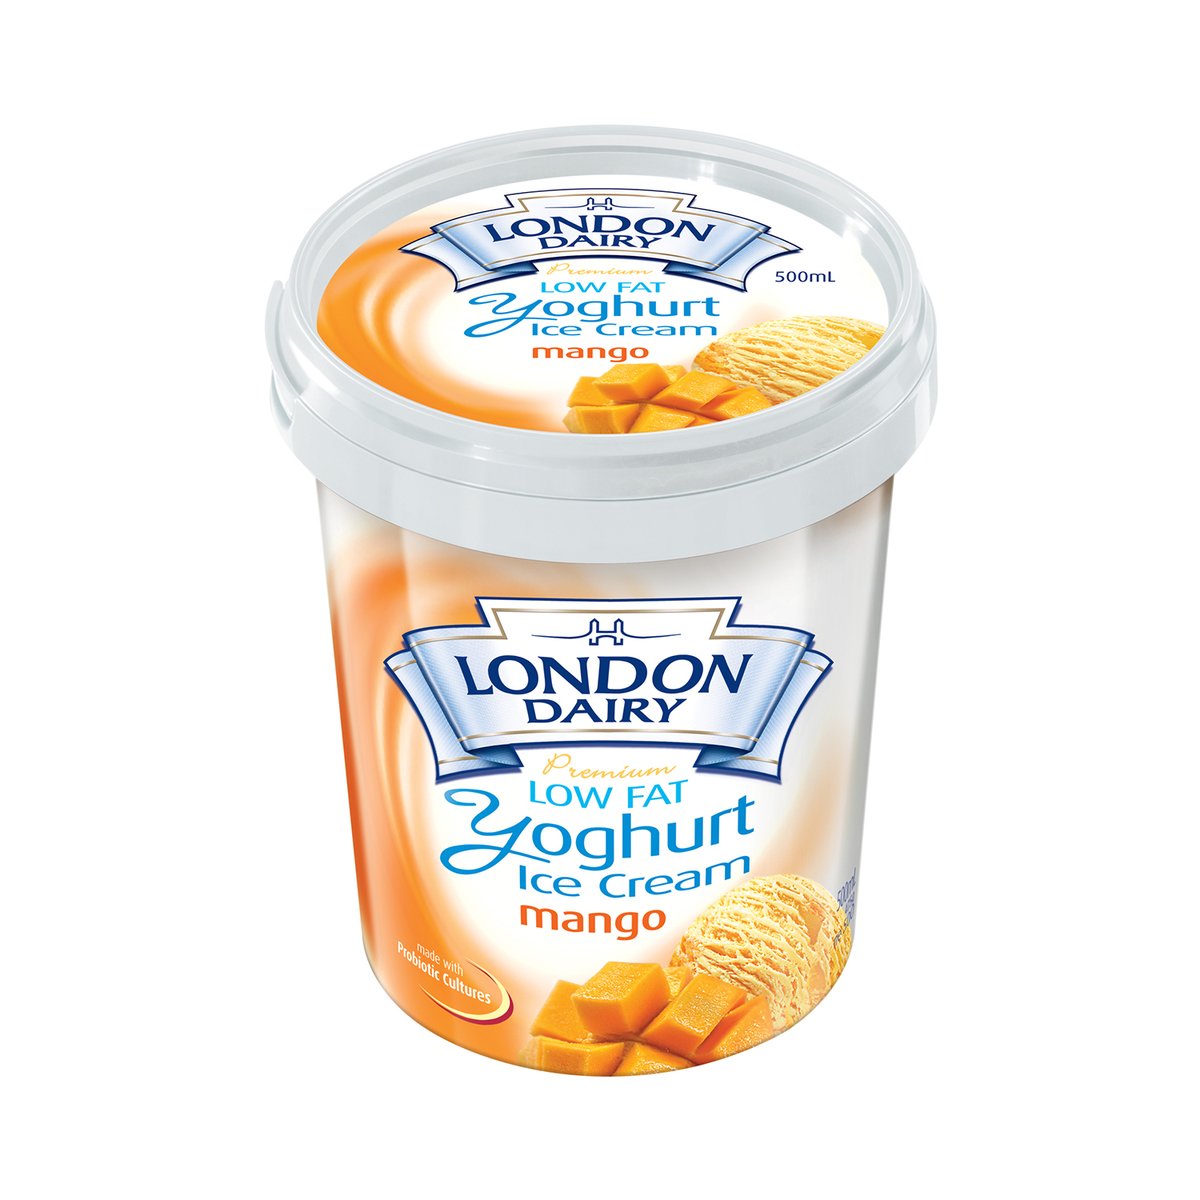 London Dairy Yoghurt Mango Ice Cream Low Fat 500 ml